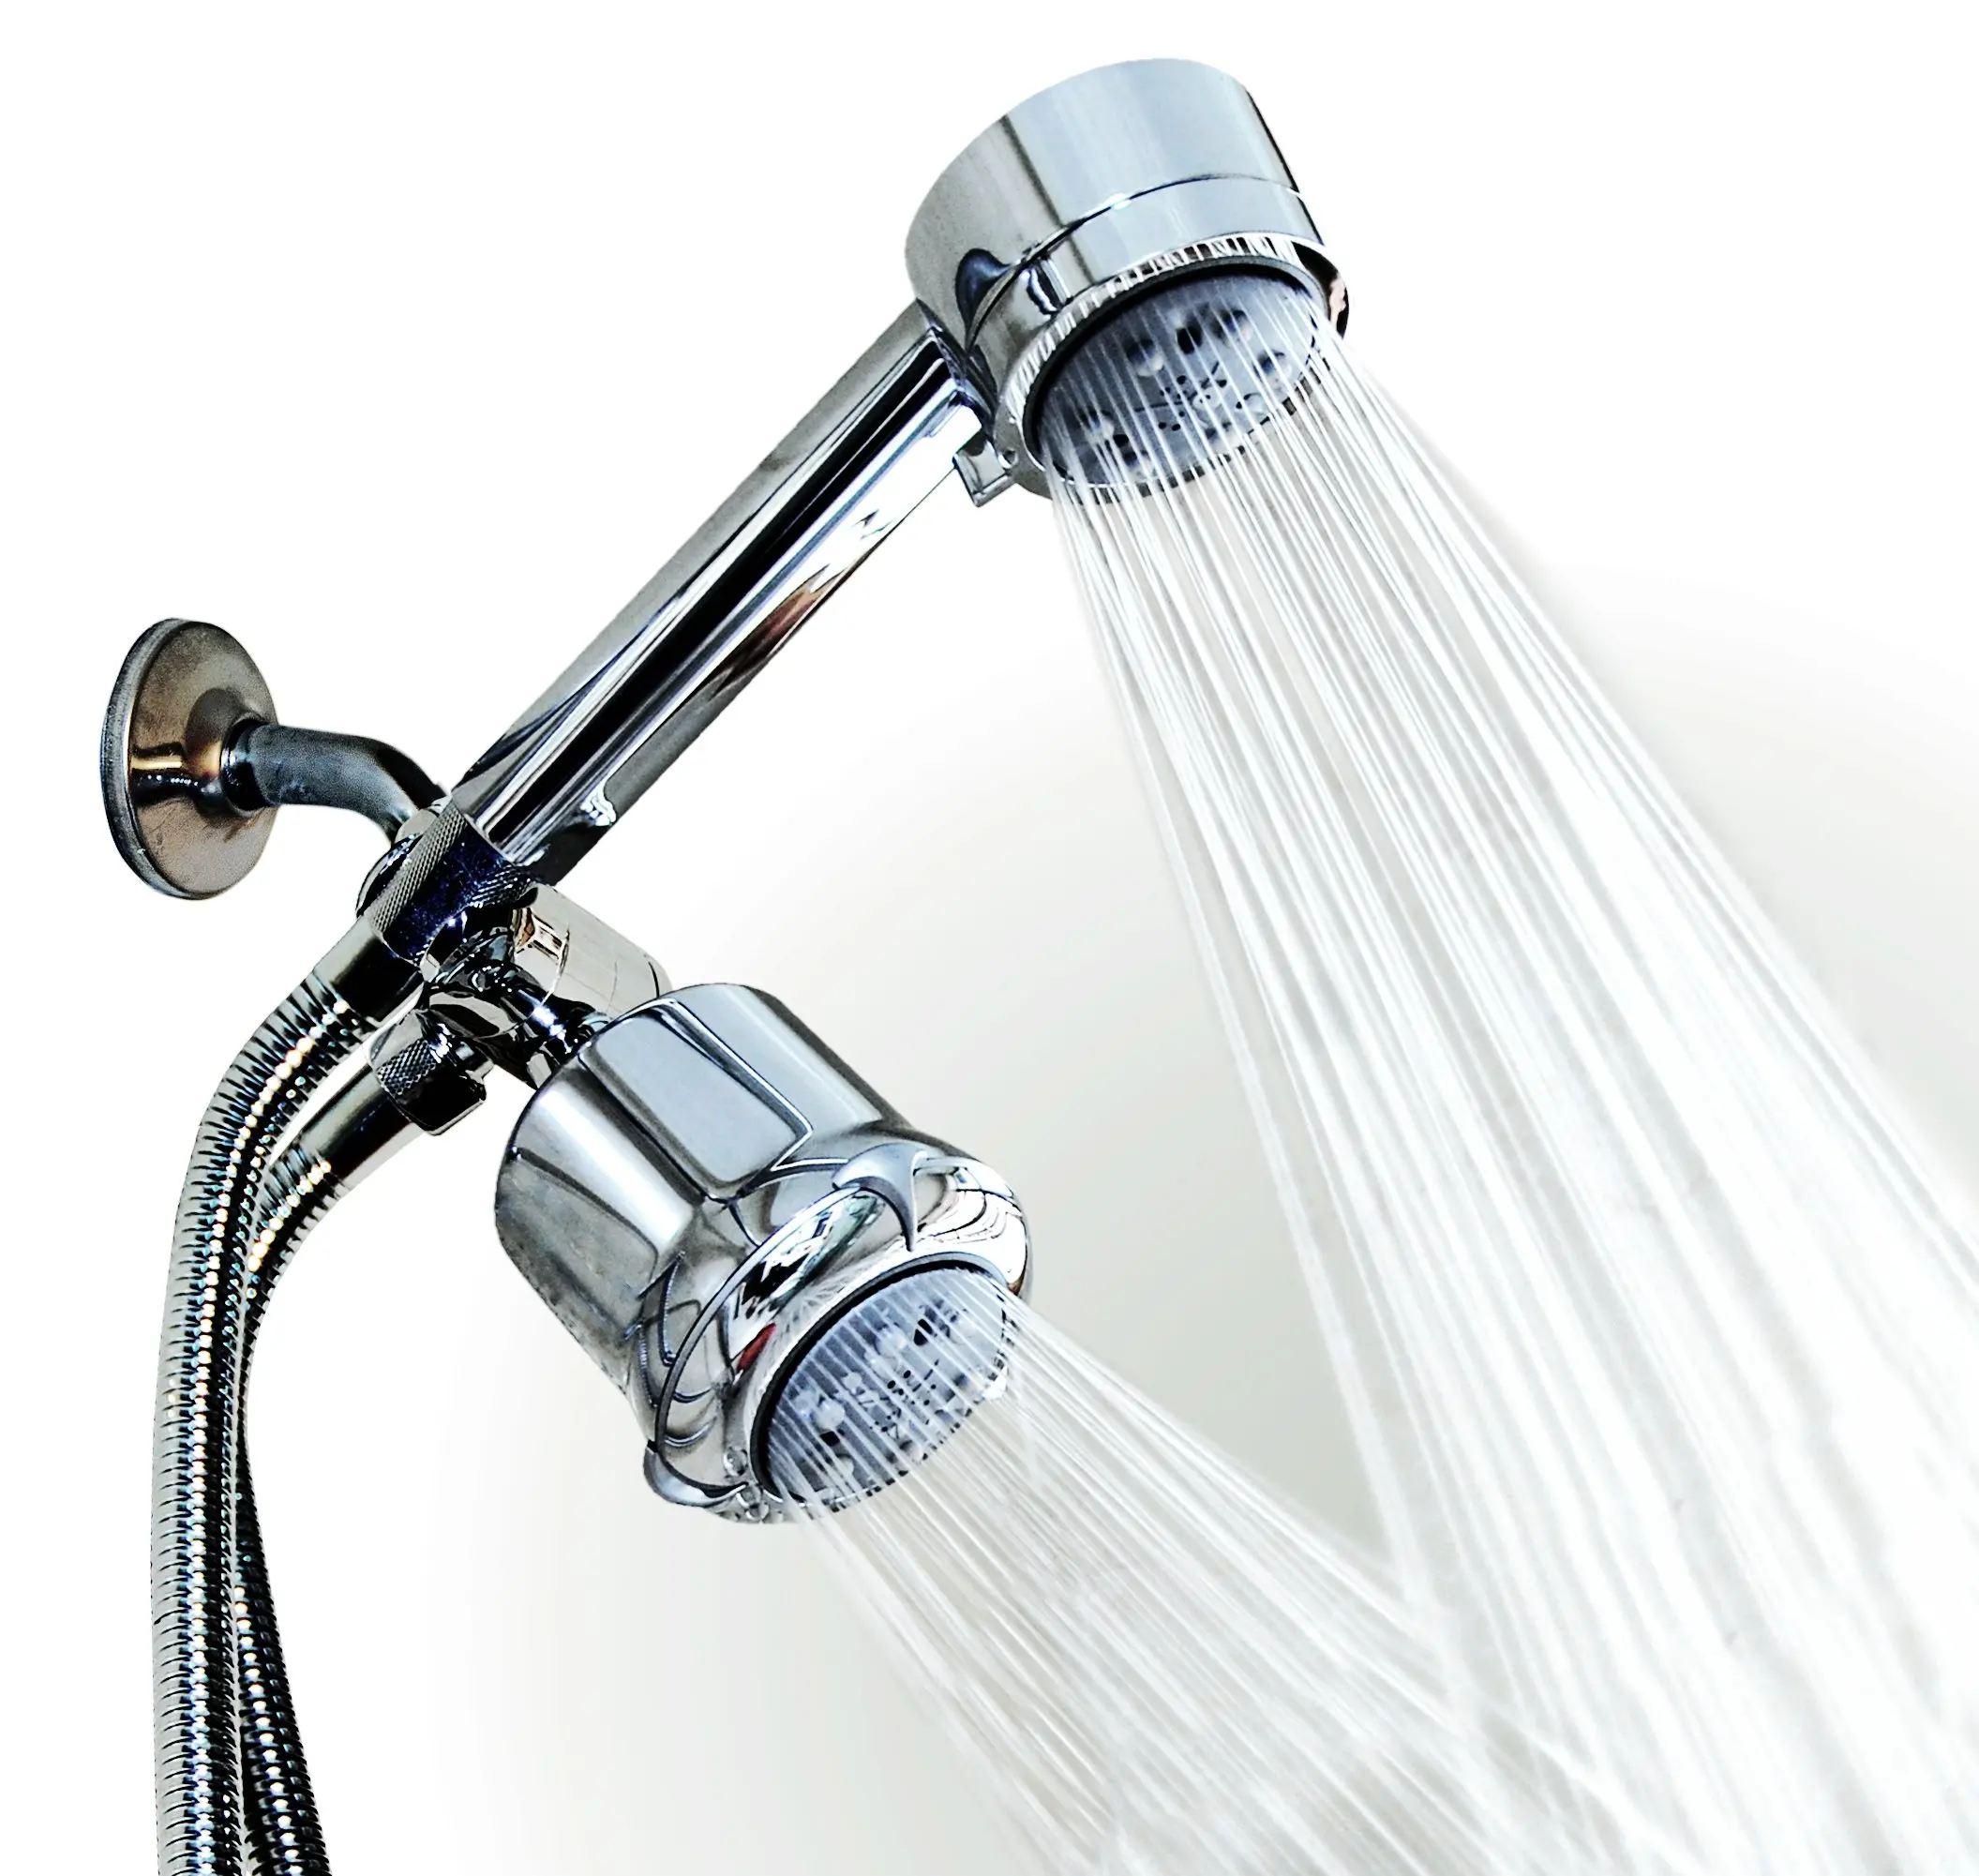 Shower top. Handheld Shower. Best Shower head Handheld. Hydrojet Shower head Review. Replacement Handheld Shower head.